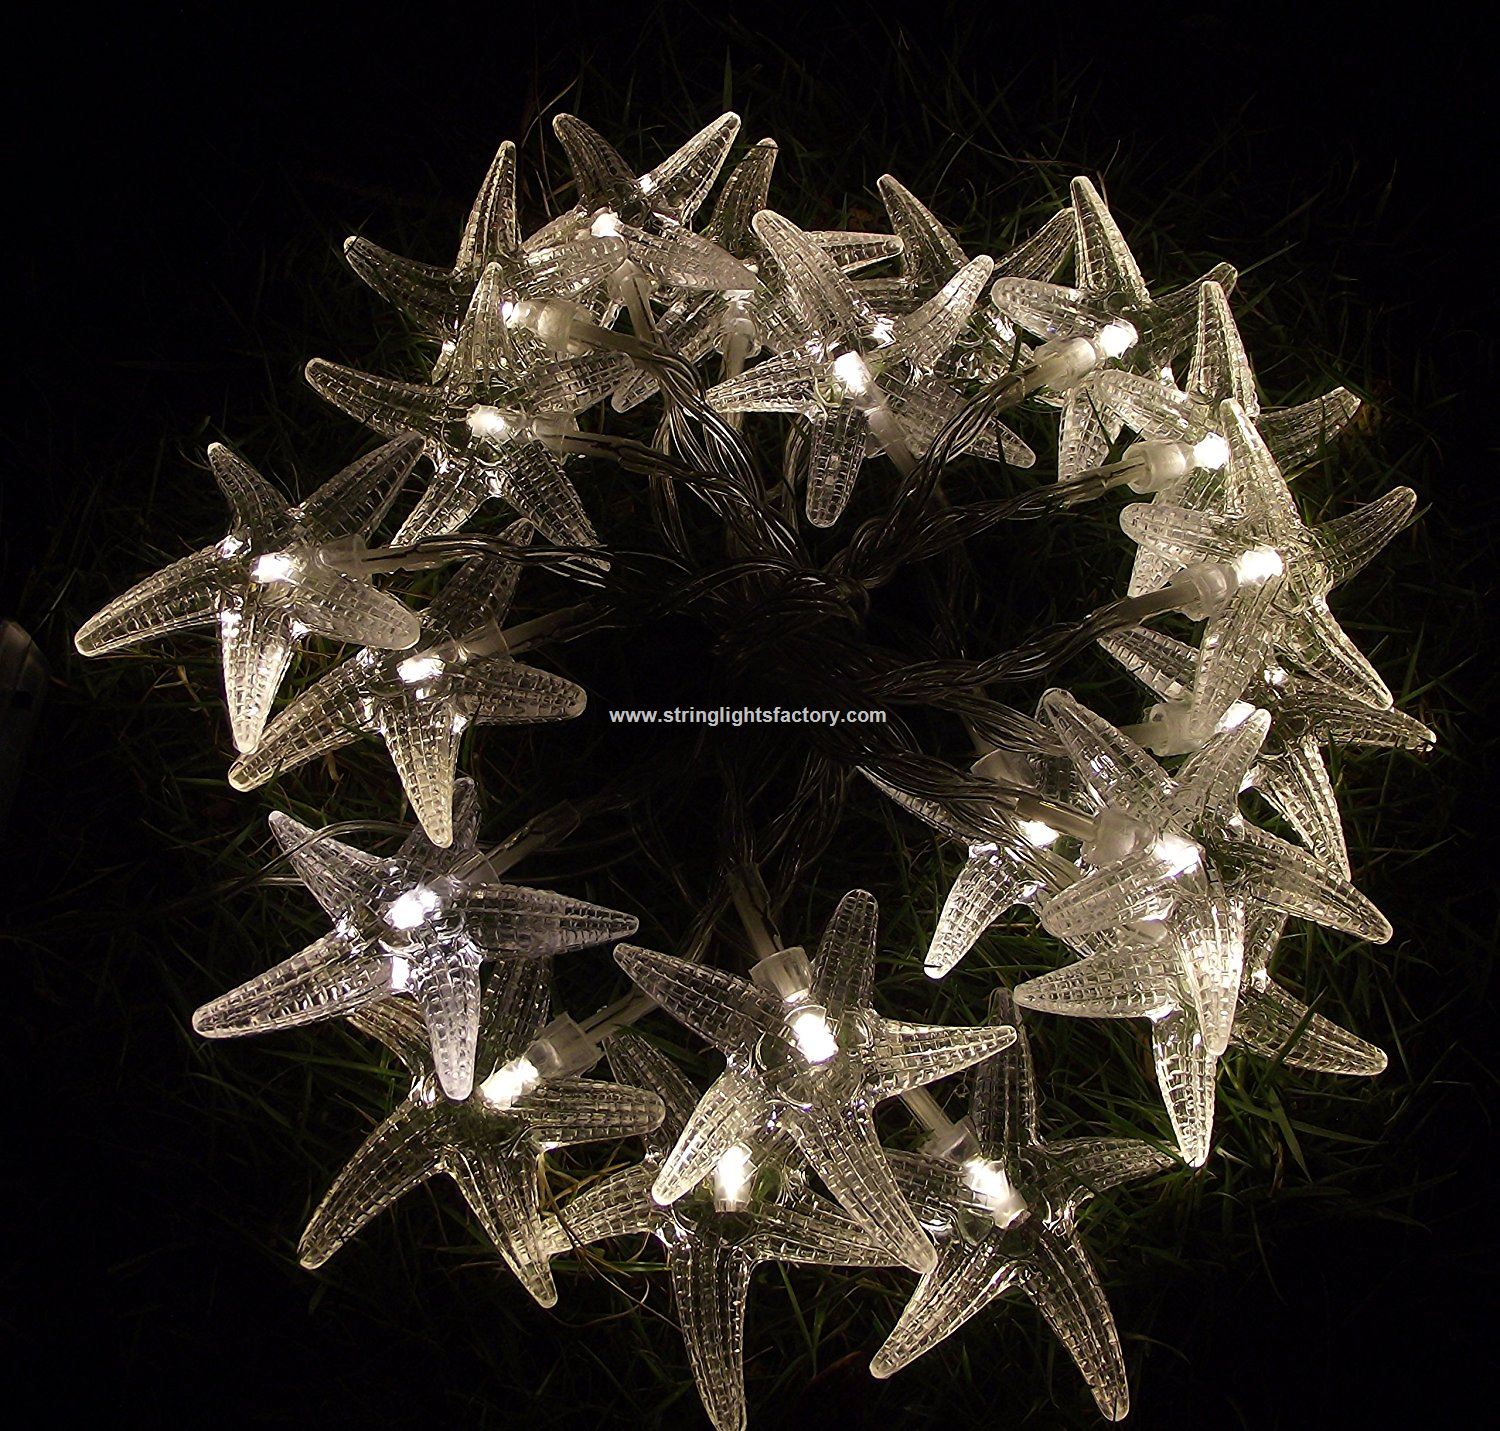 Battery Powered 30LEDs 3M Length Decorative Starfish Shape Lights Best Decorations